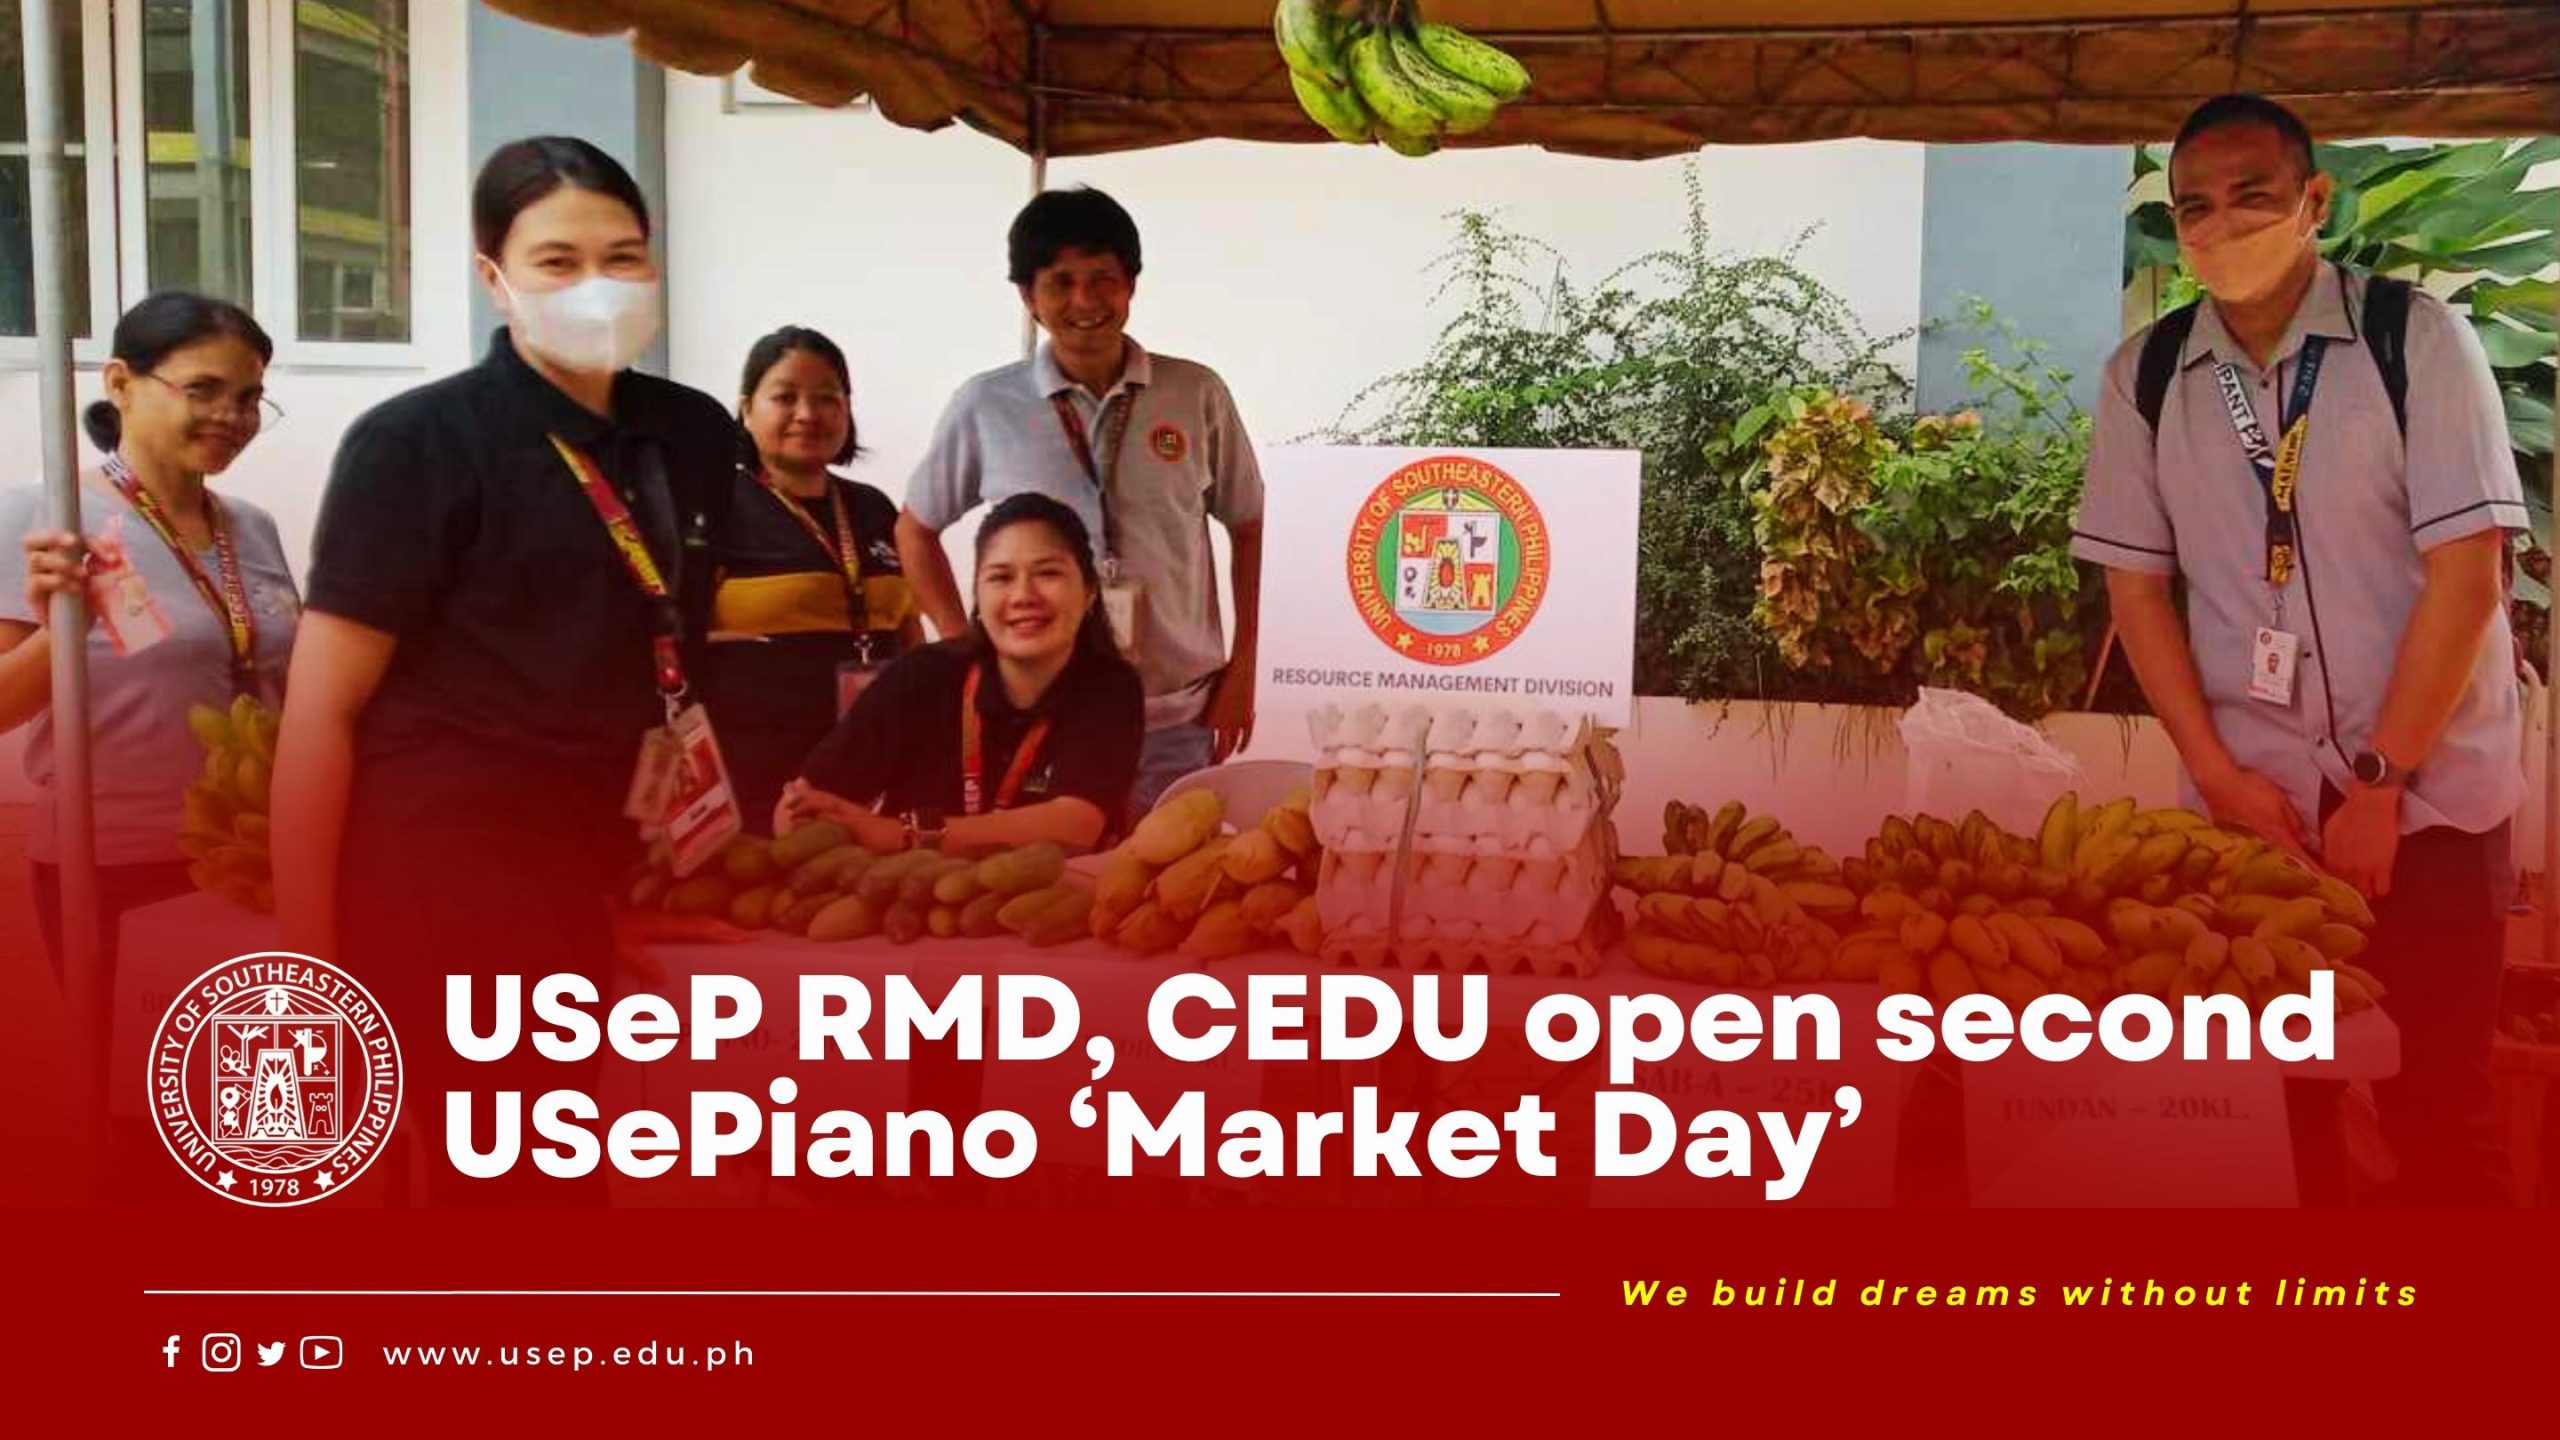 USeP RMD, CEDU open second USePiano ‘Market Day’